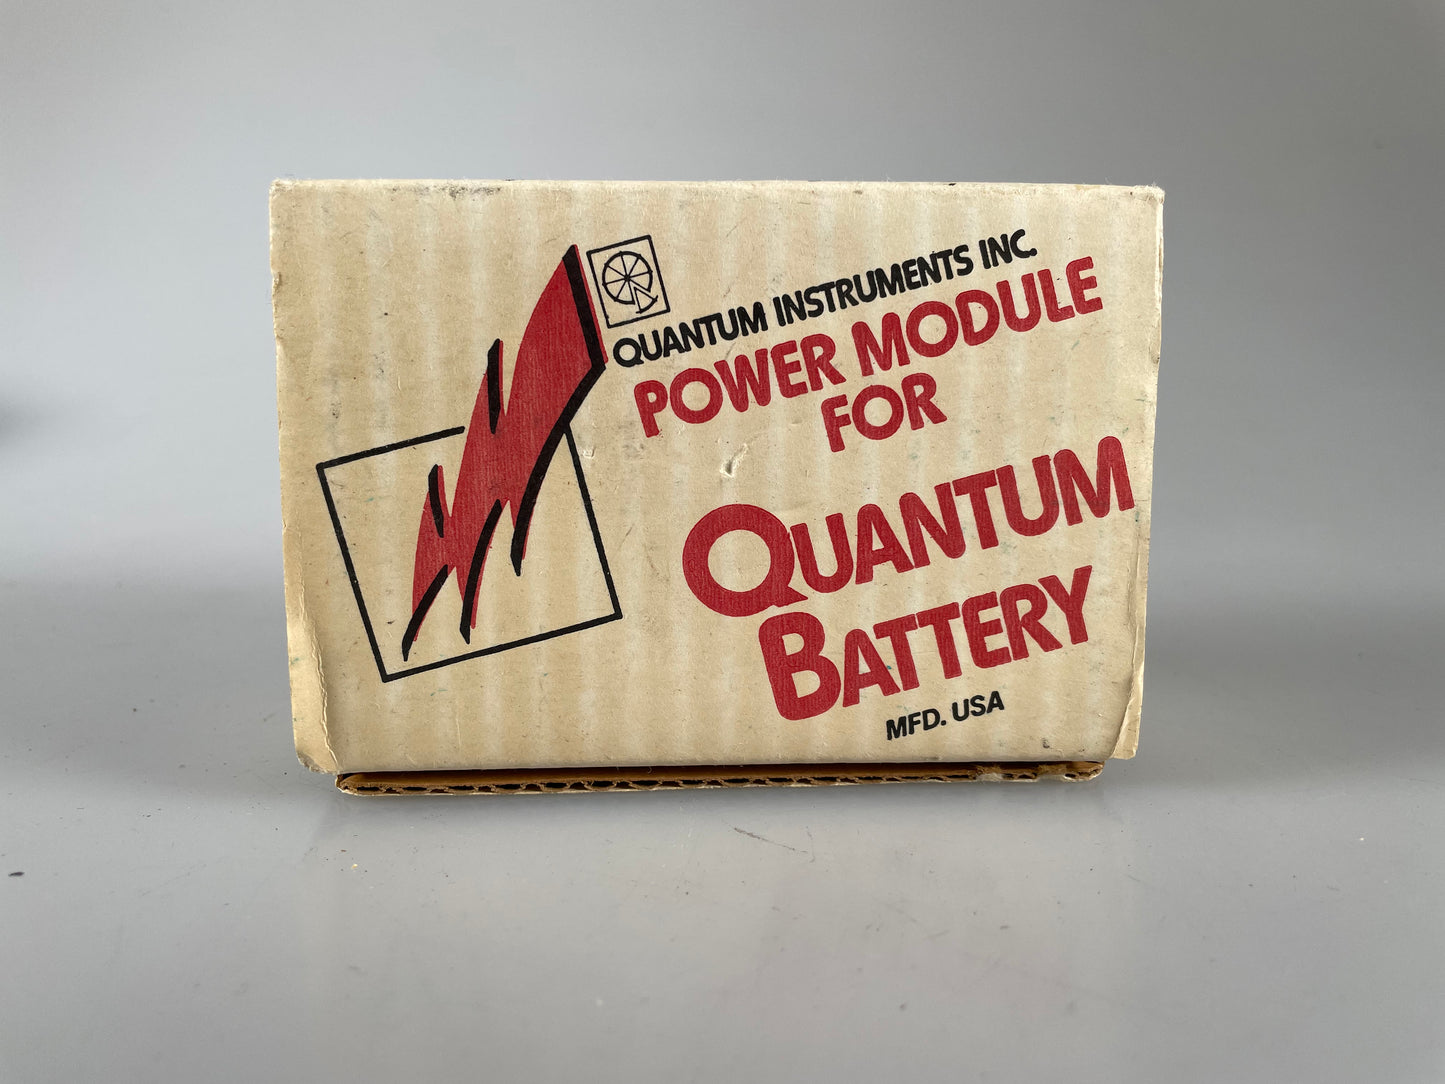 Quantum AA Battery Adapter QB 1 - MA2 Module For Vivitar 283 & 285 Flashes